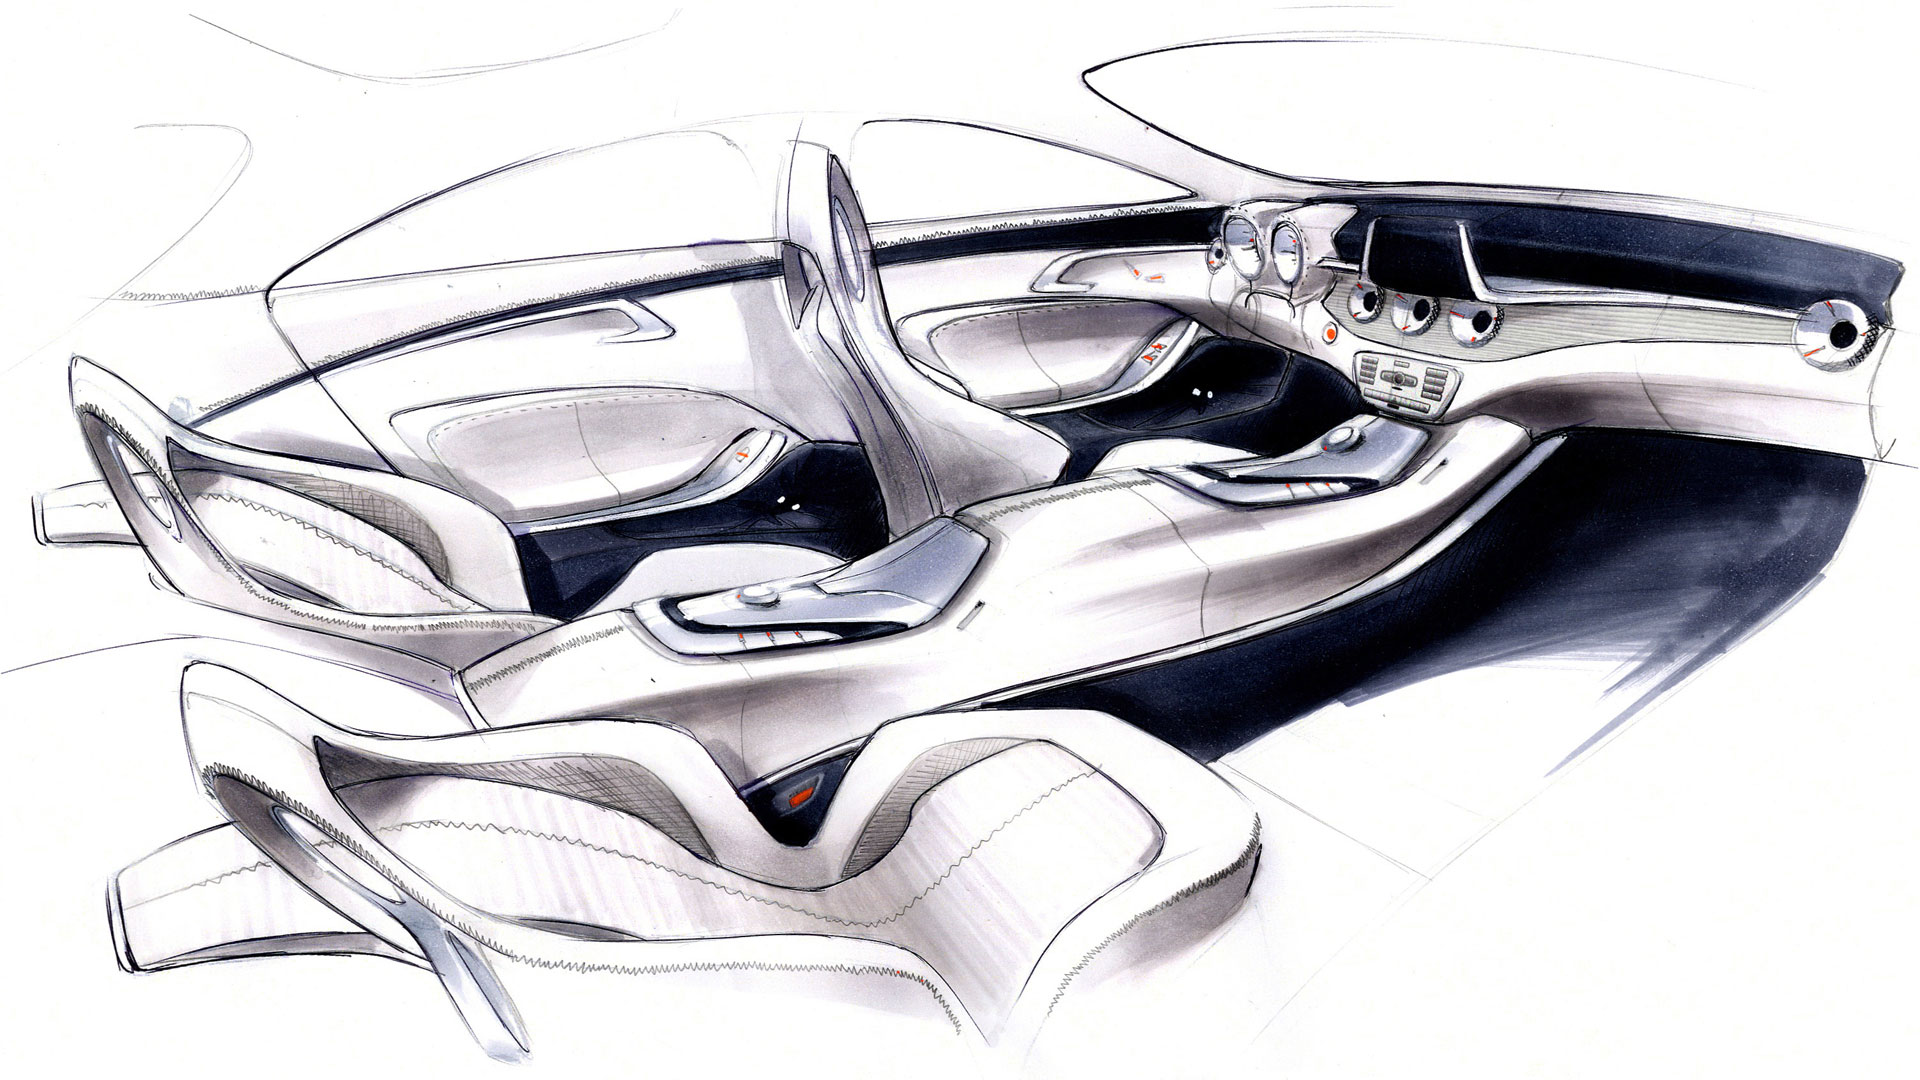 Mercedes-Benz Concept Style Coupe, 2012